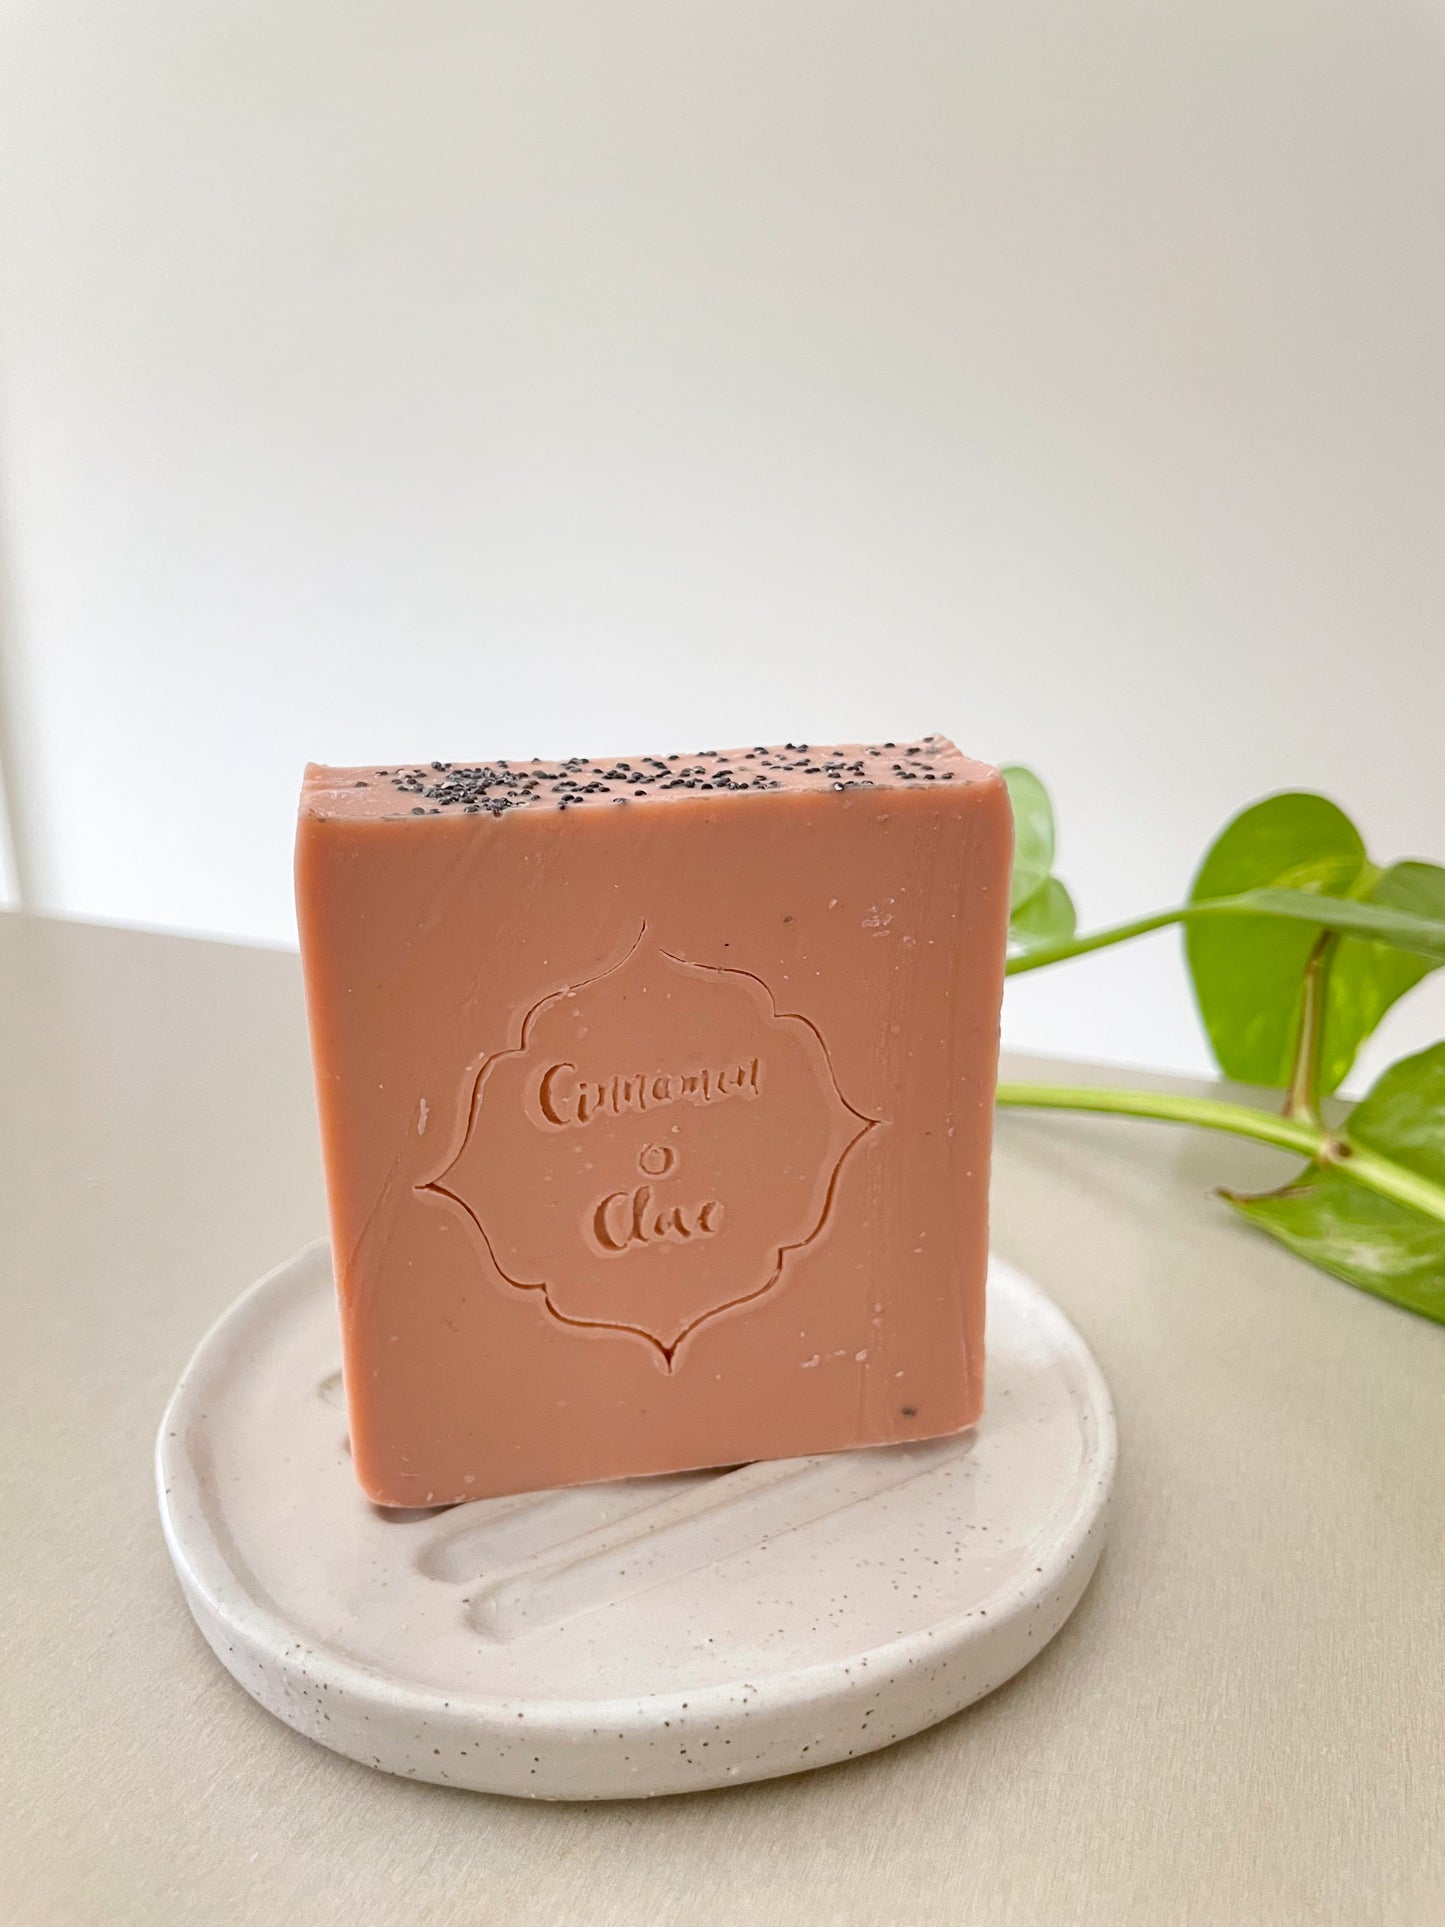 Kidude handmade natural soap placed on a ceramic soap dish